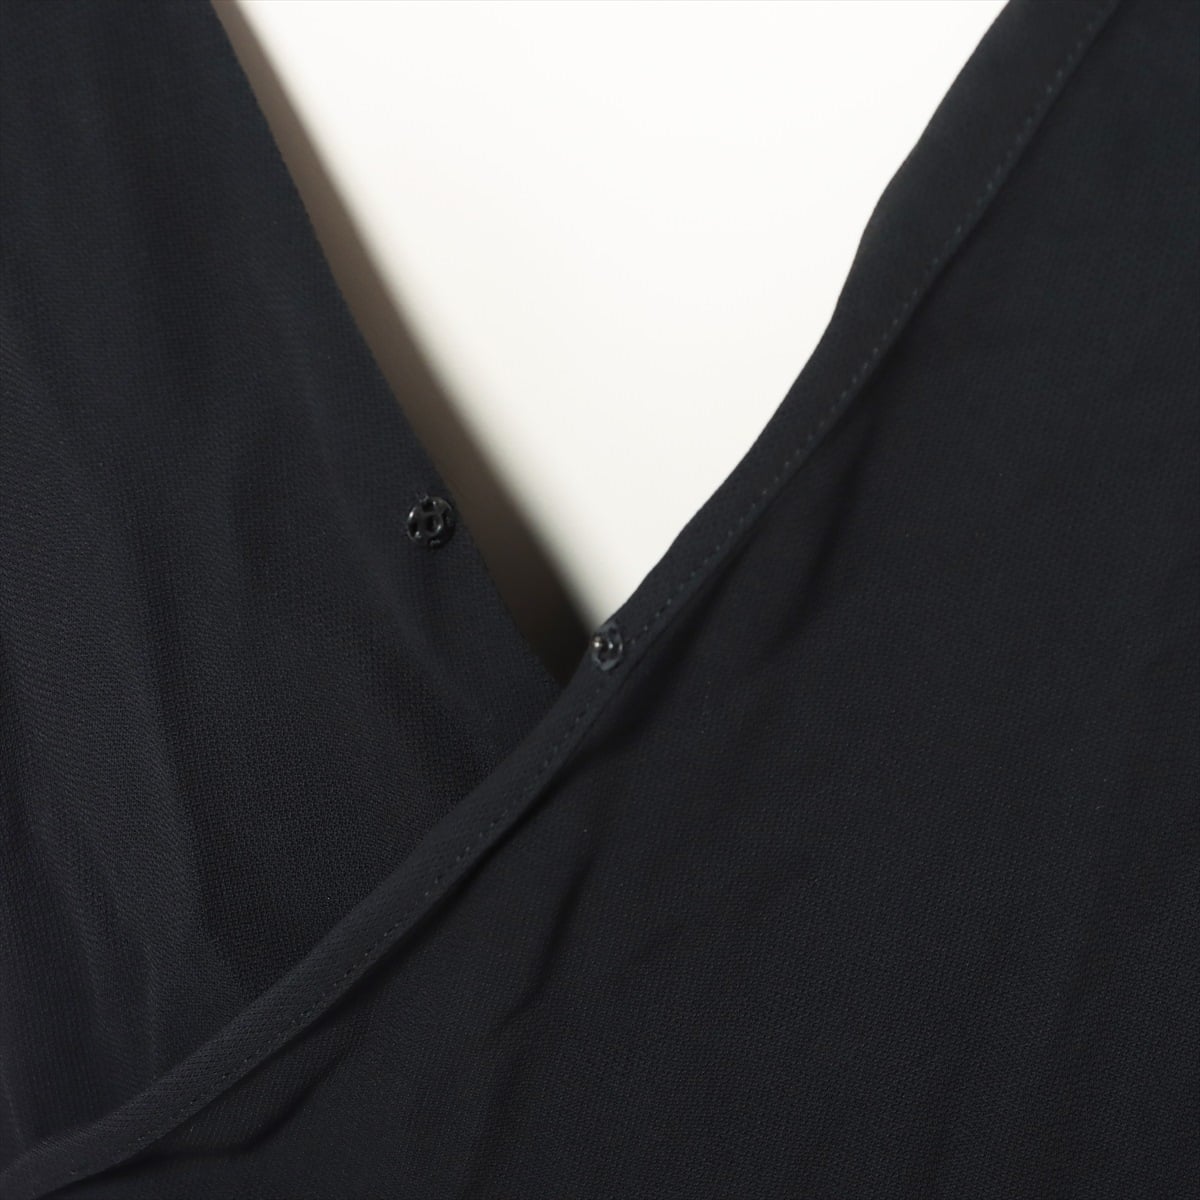 Hermès Margiela Rayon Sleeveless dress 34 Ladies' Black